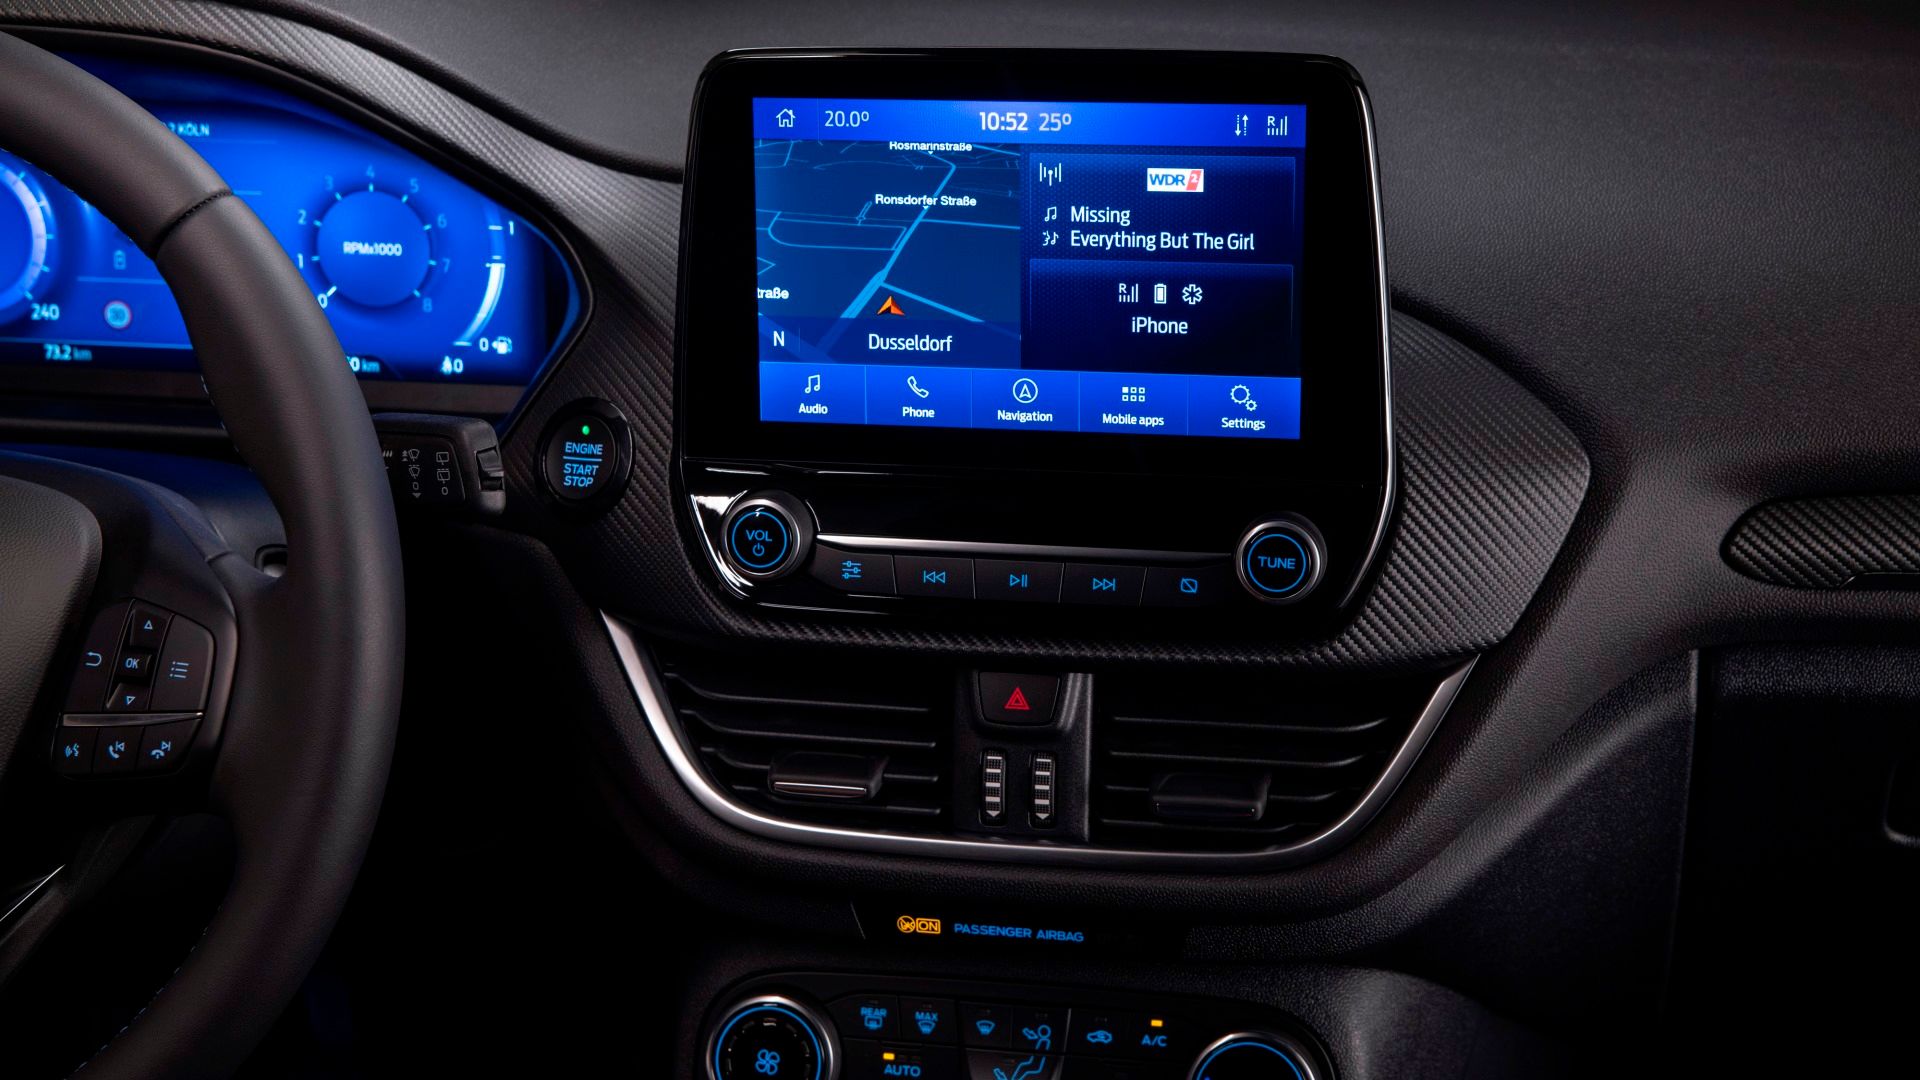 Ford Fiesta infotainment system